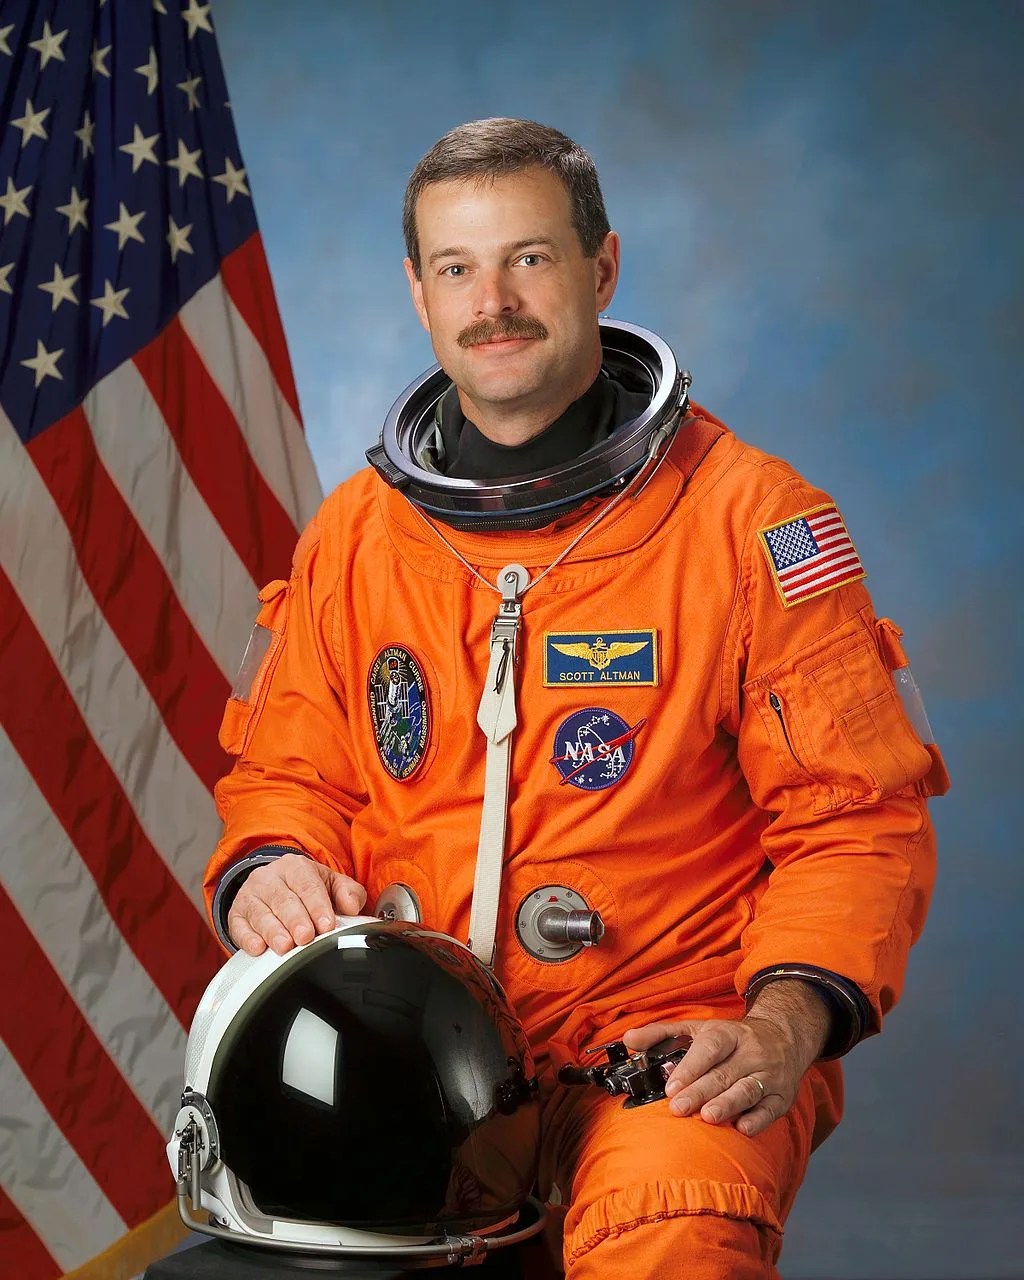 Photo of astronaut Scott Altman in his orange spacesuit. American flag is behind him.